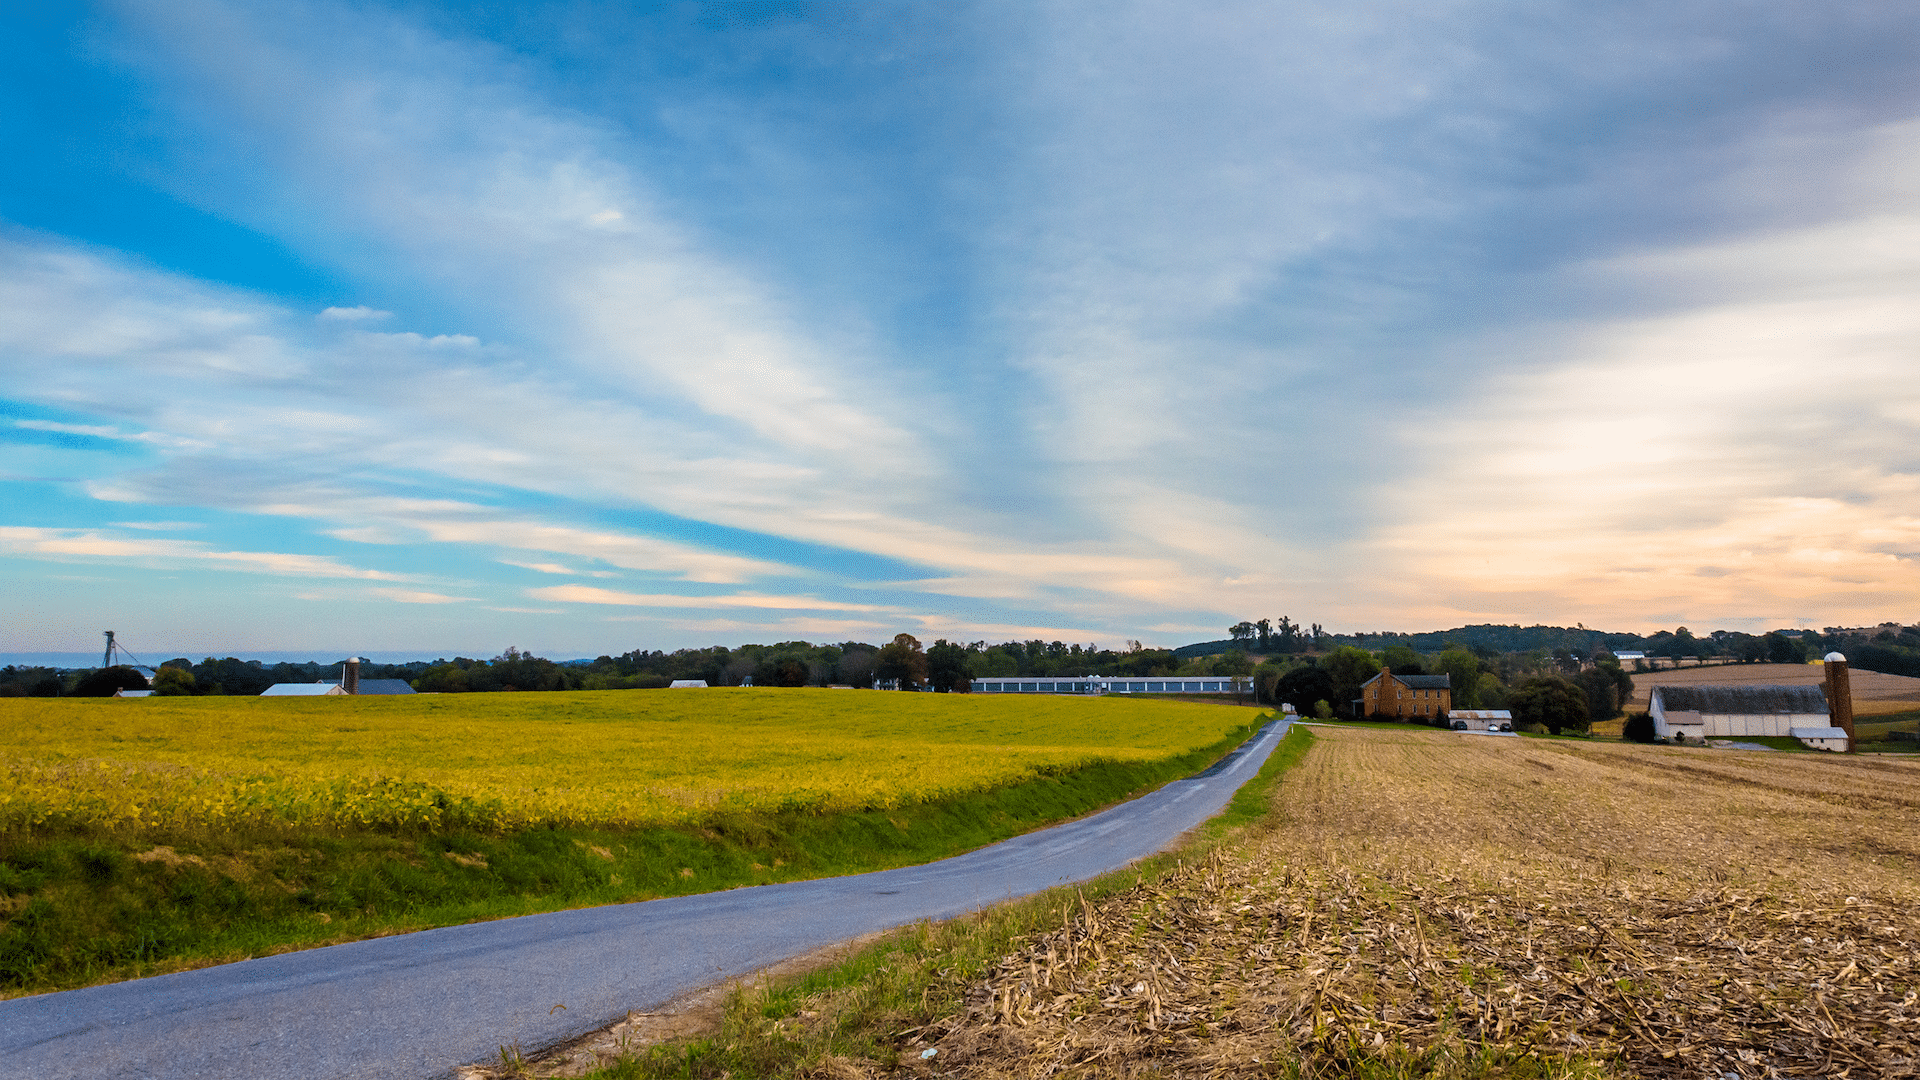 a field in rural Pennsylvania